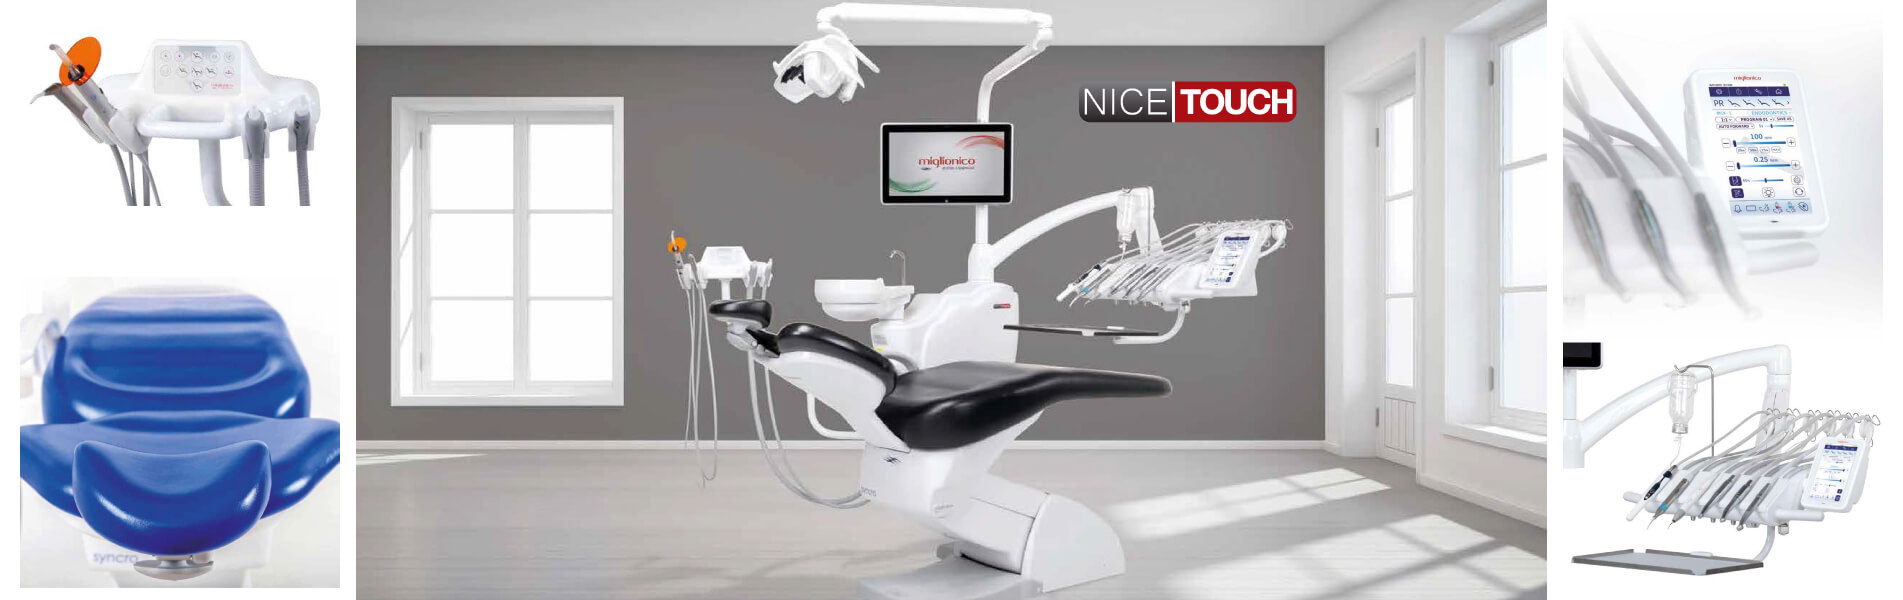 Nice touch - Dental Hitech Elettromedicali